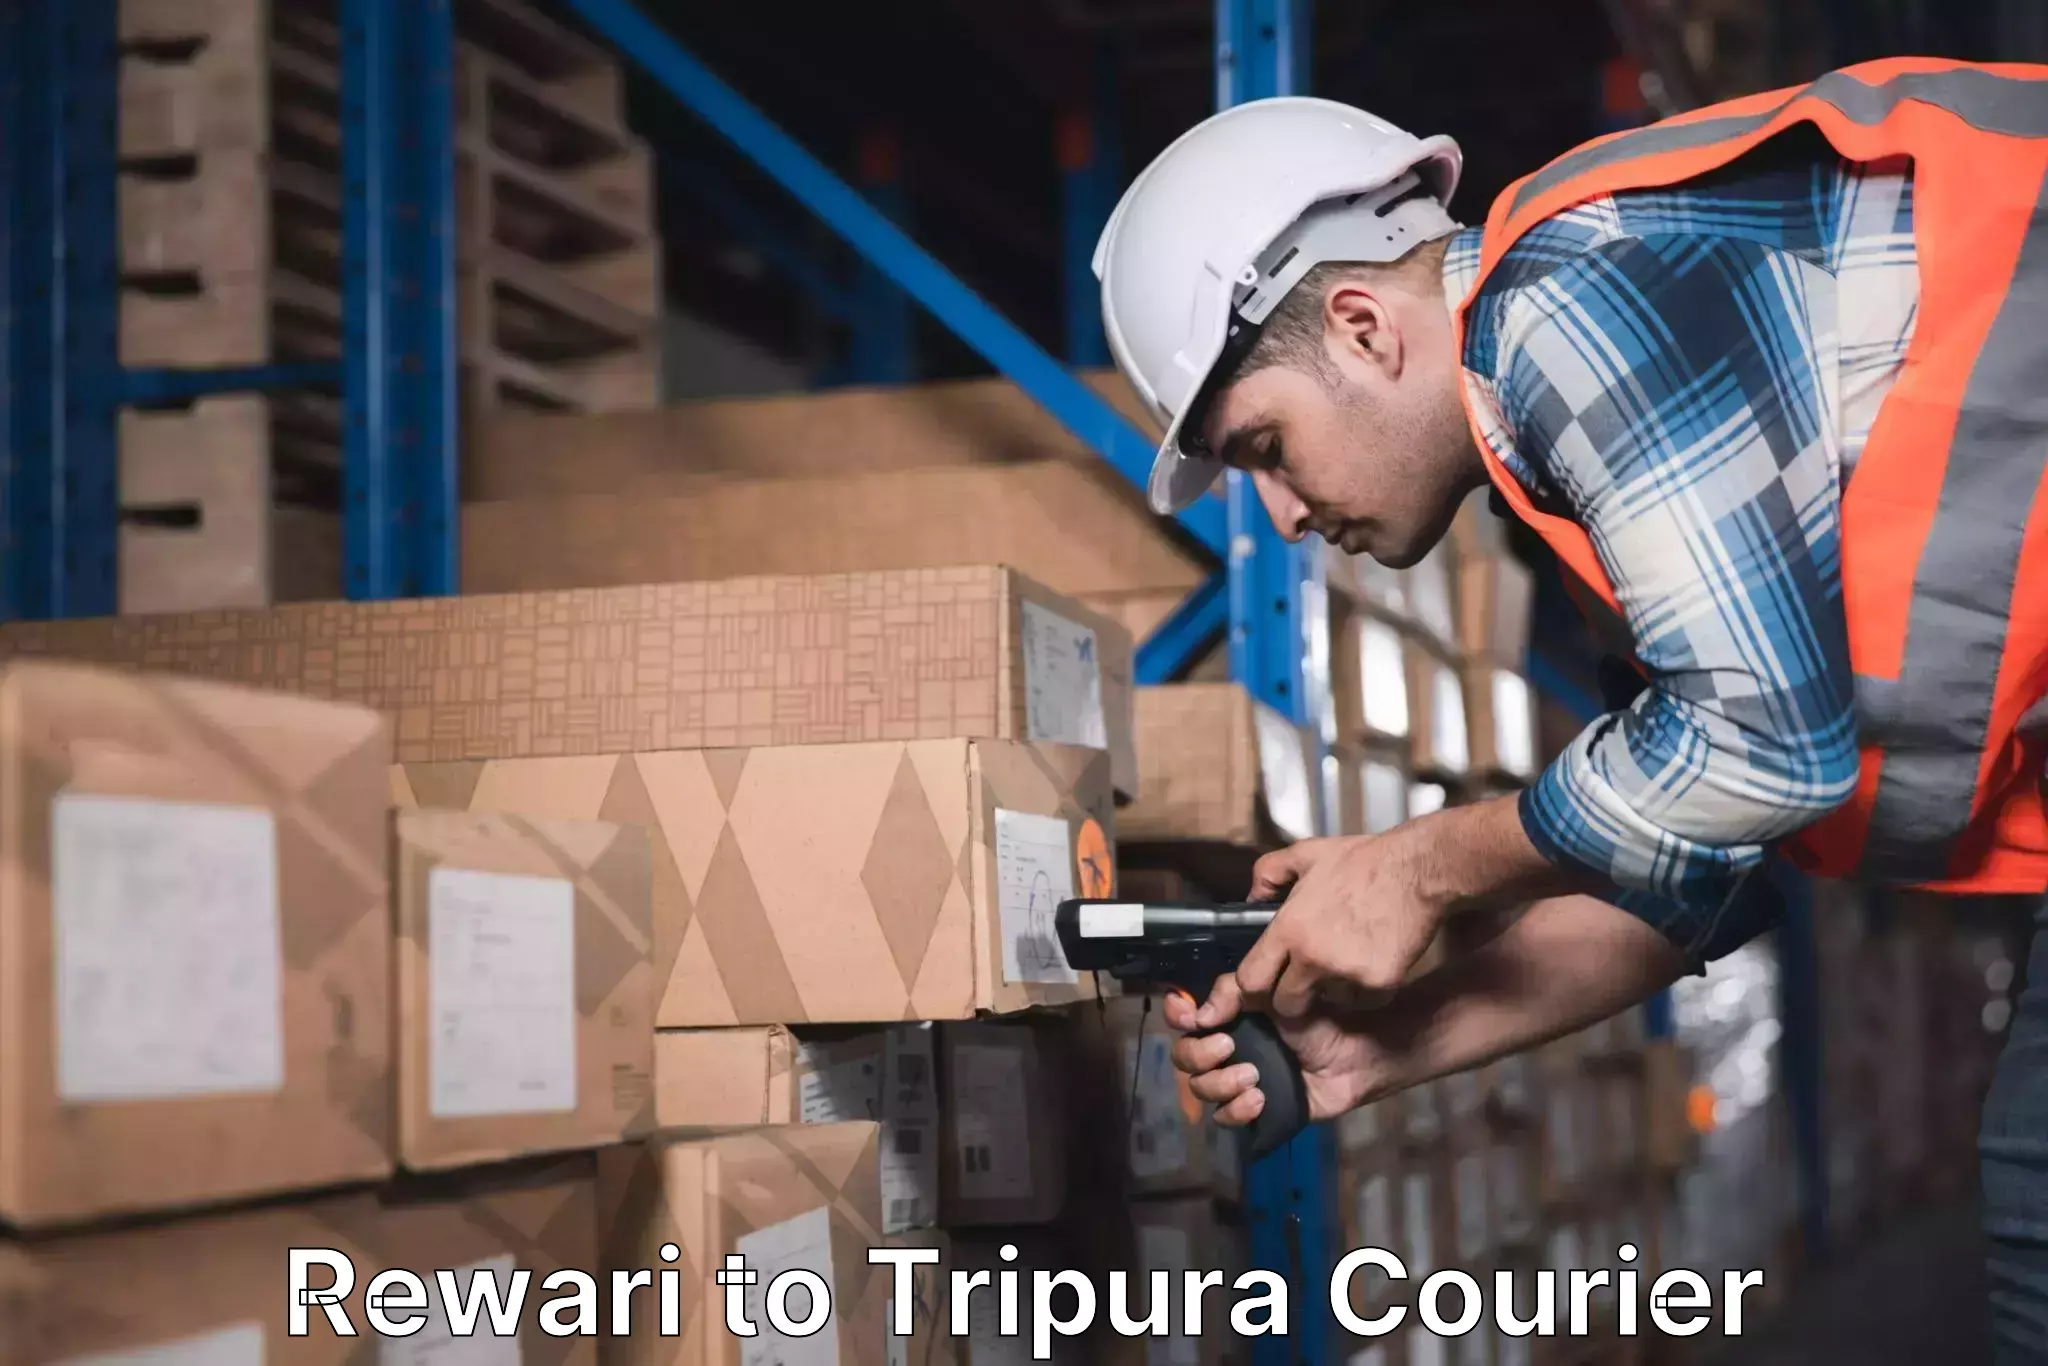 Efficient parcel delivery Rewari to Udaipur Tripura